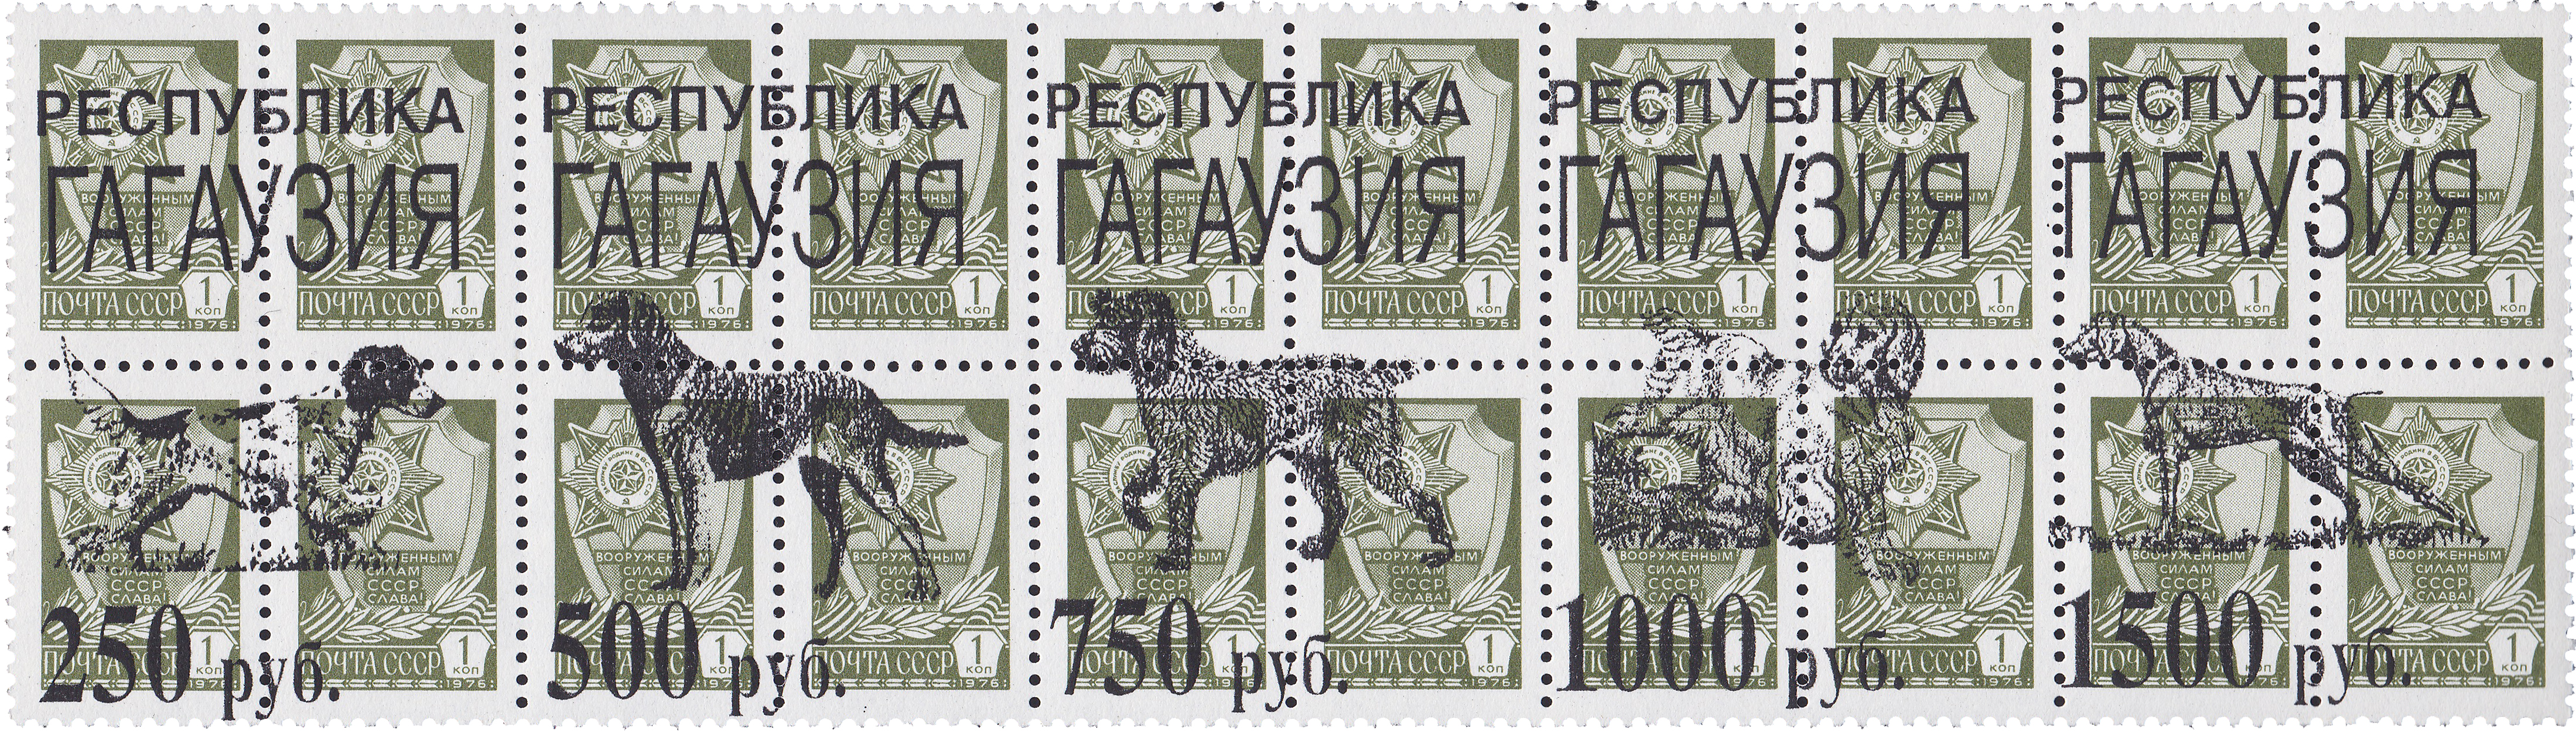 Надпечатка на 1 Копейка 1994 год. Республика Гагаузия